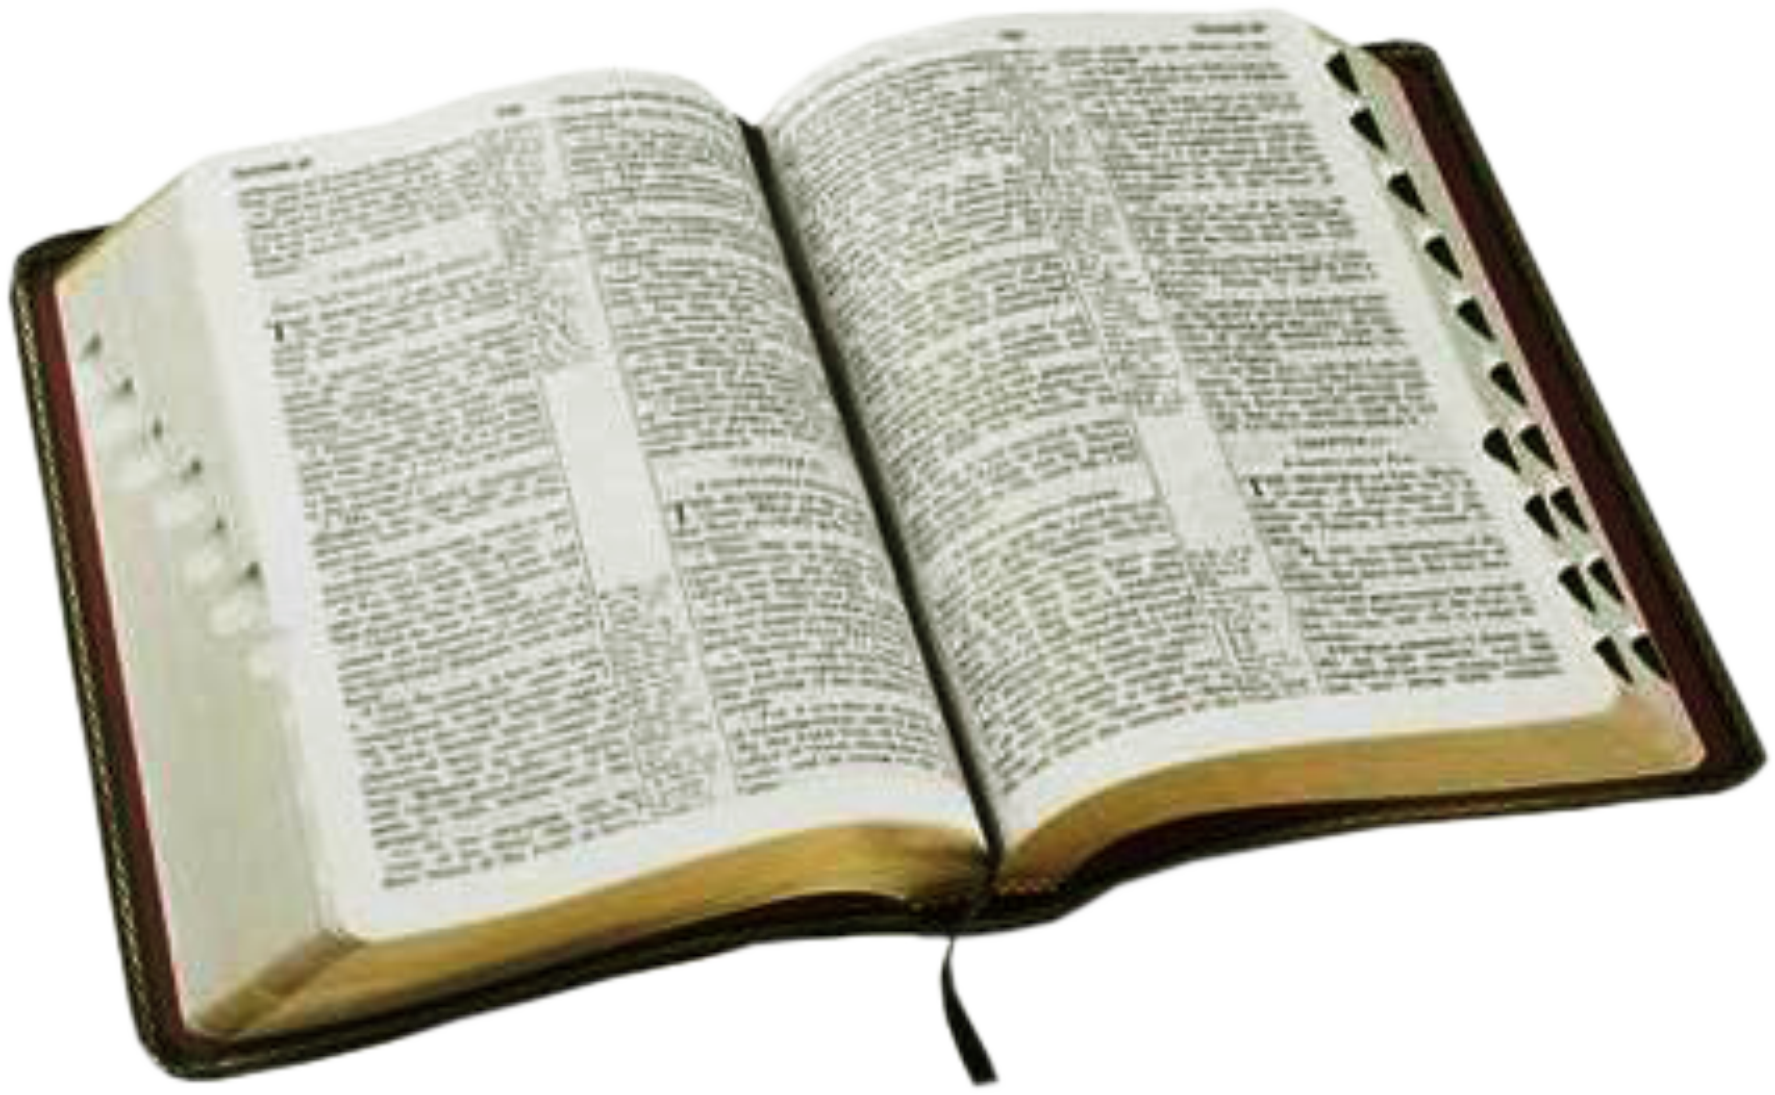 Download PNG image - Bible PNG Image 